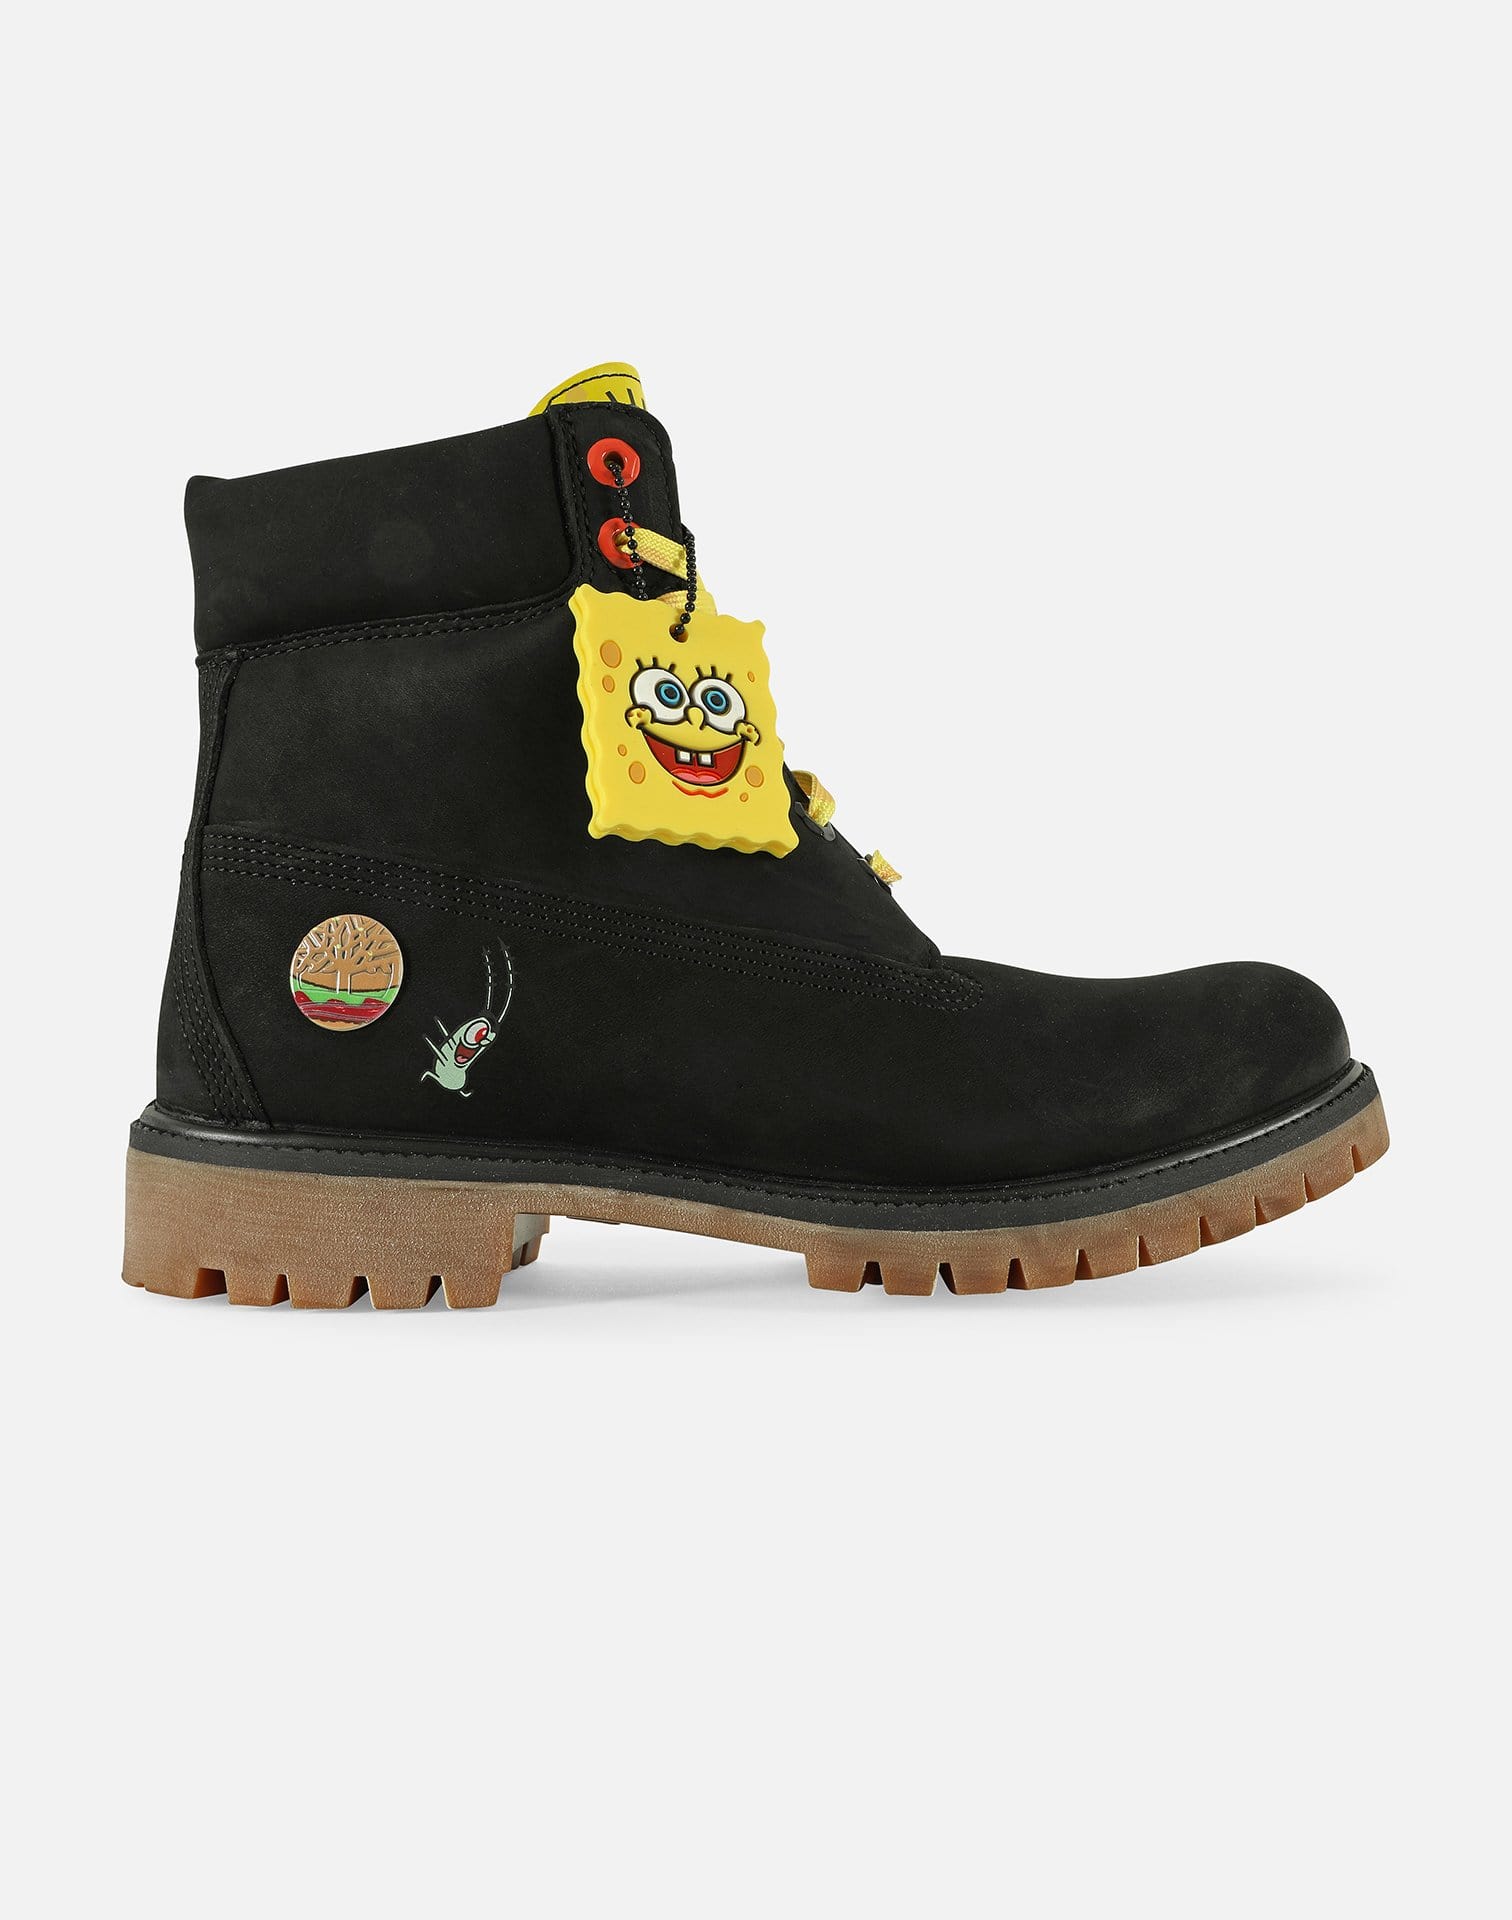 Timberland x Spongebob Squarepants Men's 6" Premium Boots